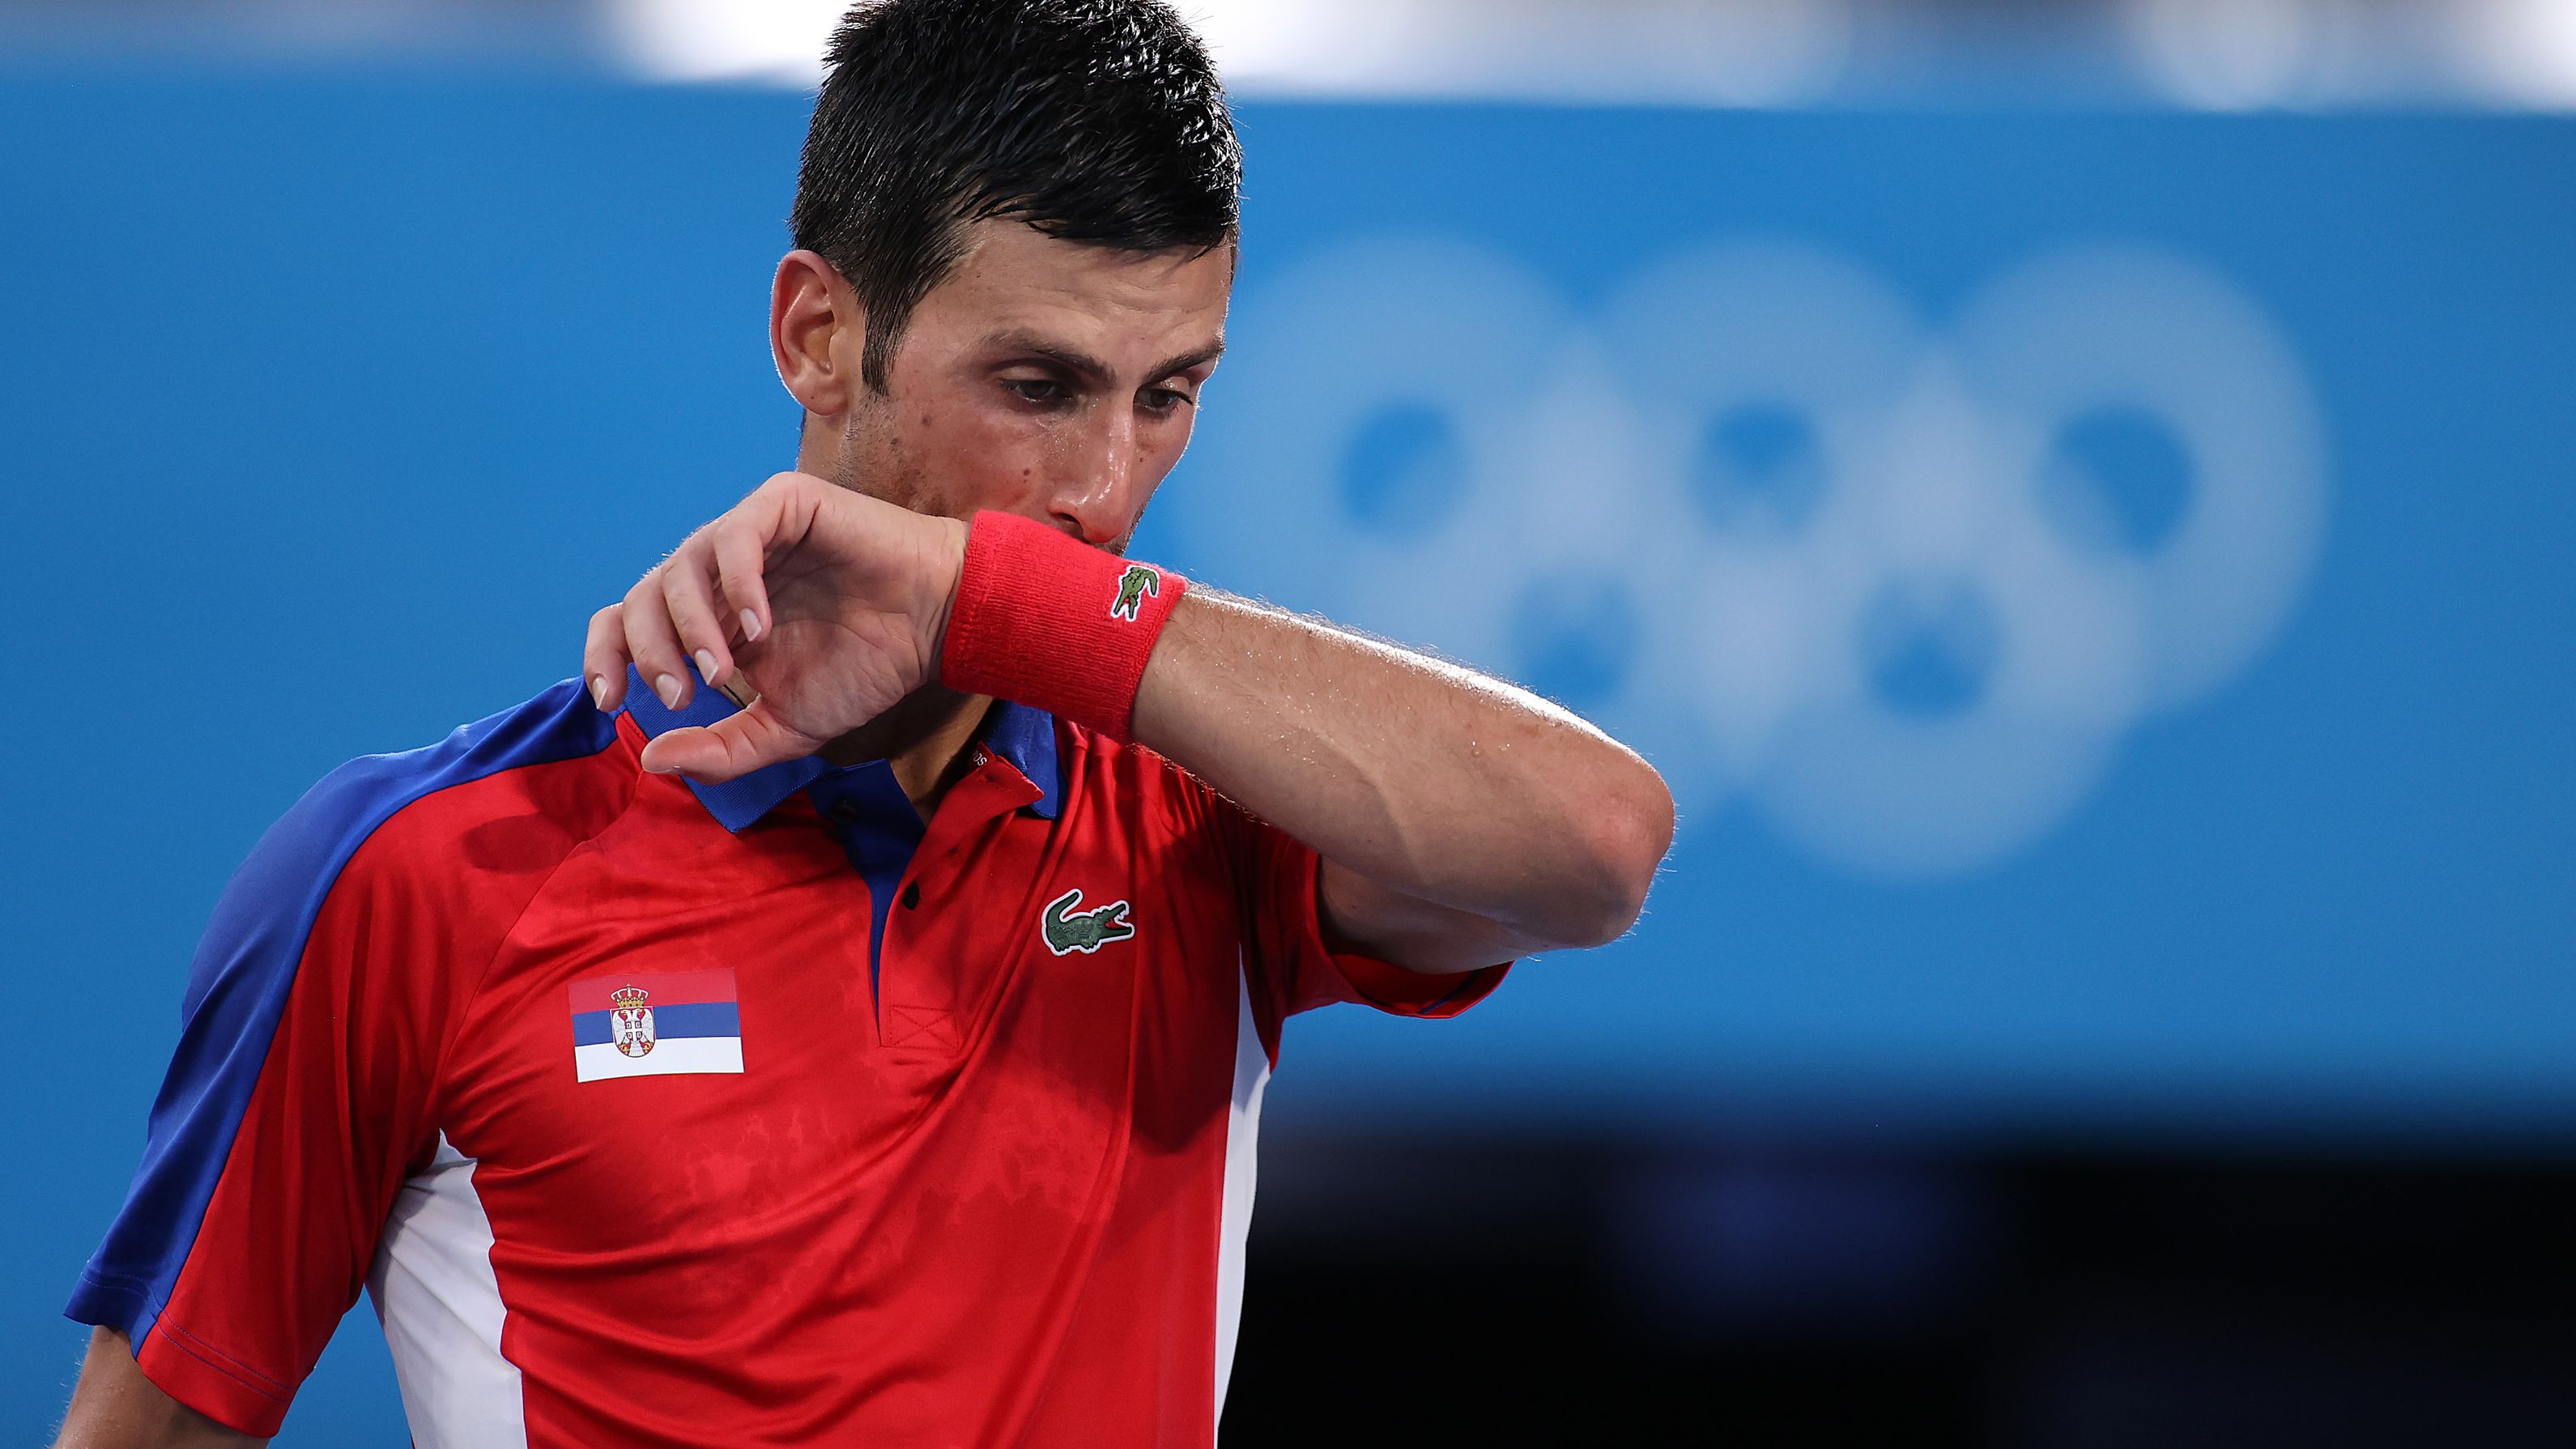 Djokovic's Golden Slam dream comes to brutal end